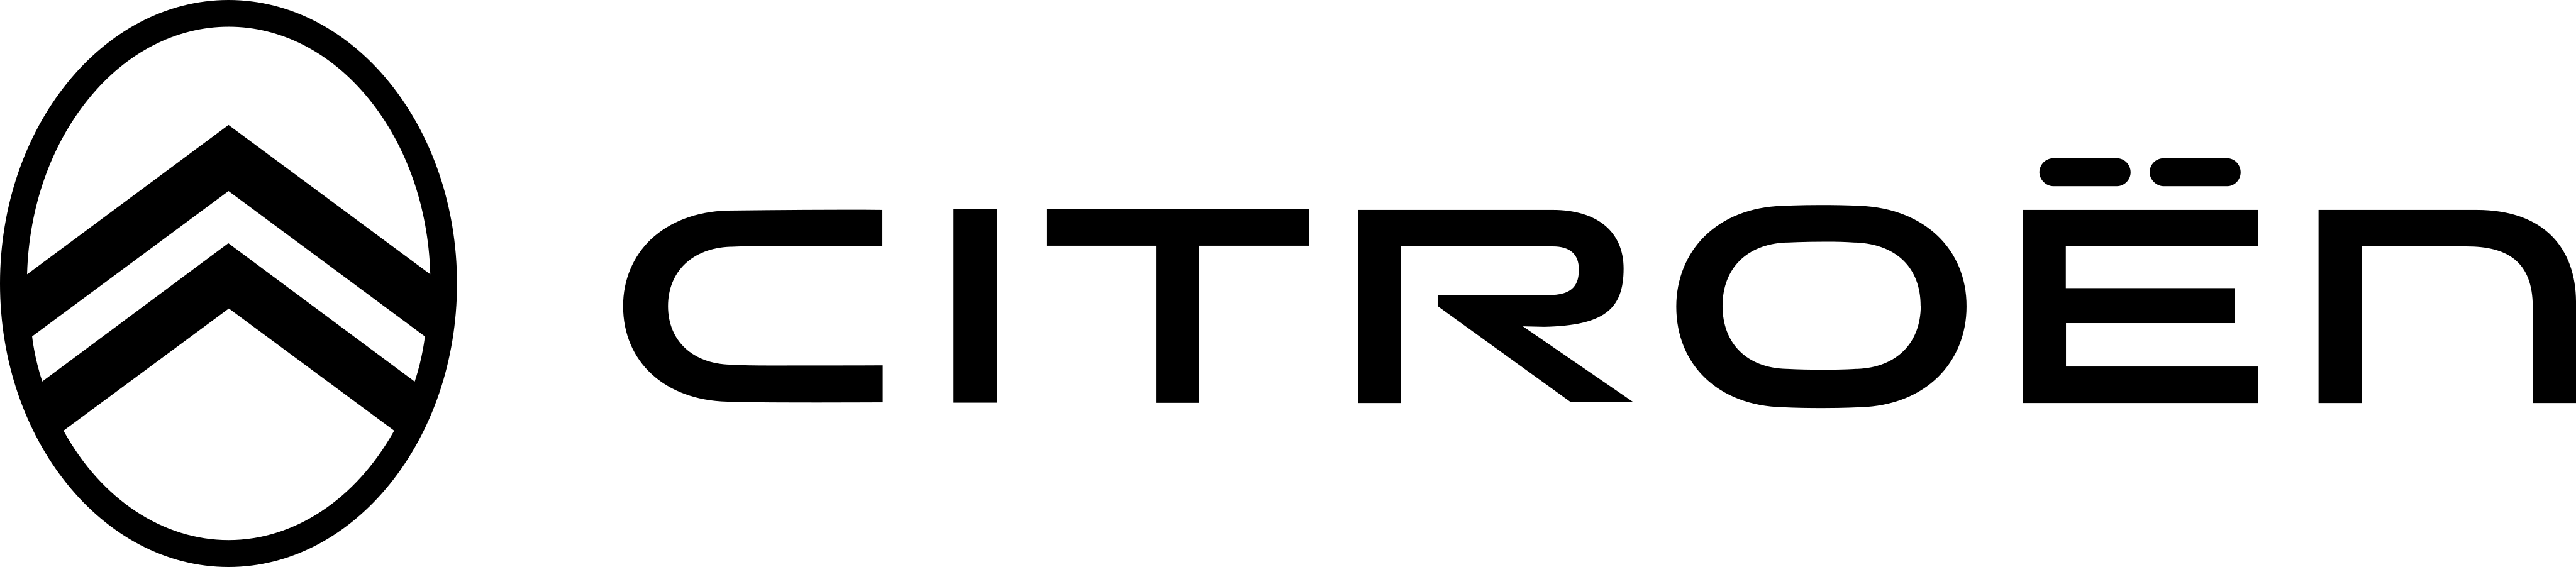 citroen-logo-3